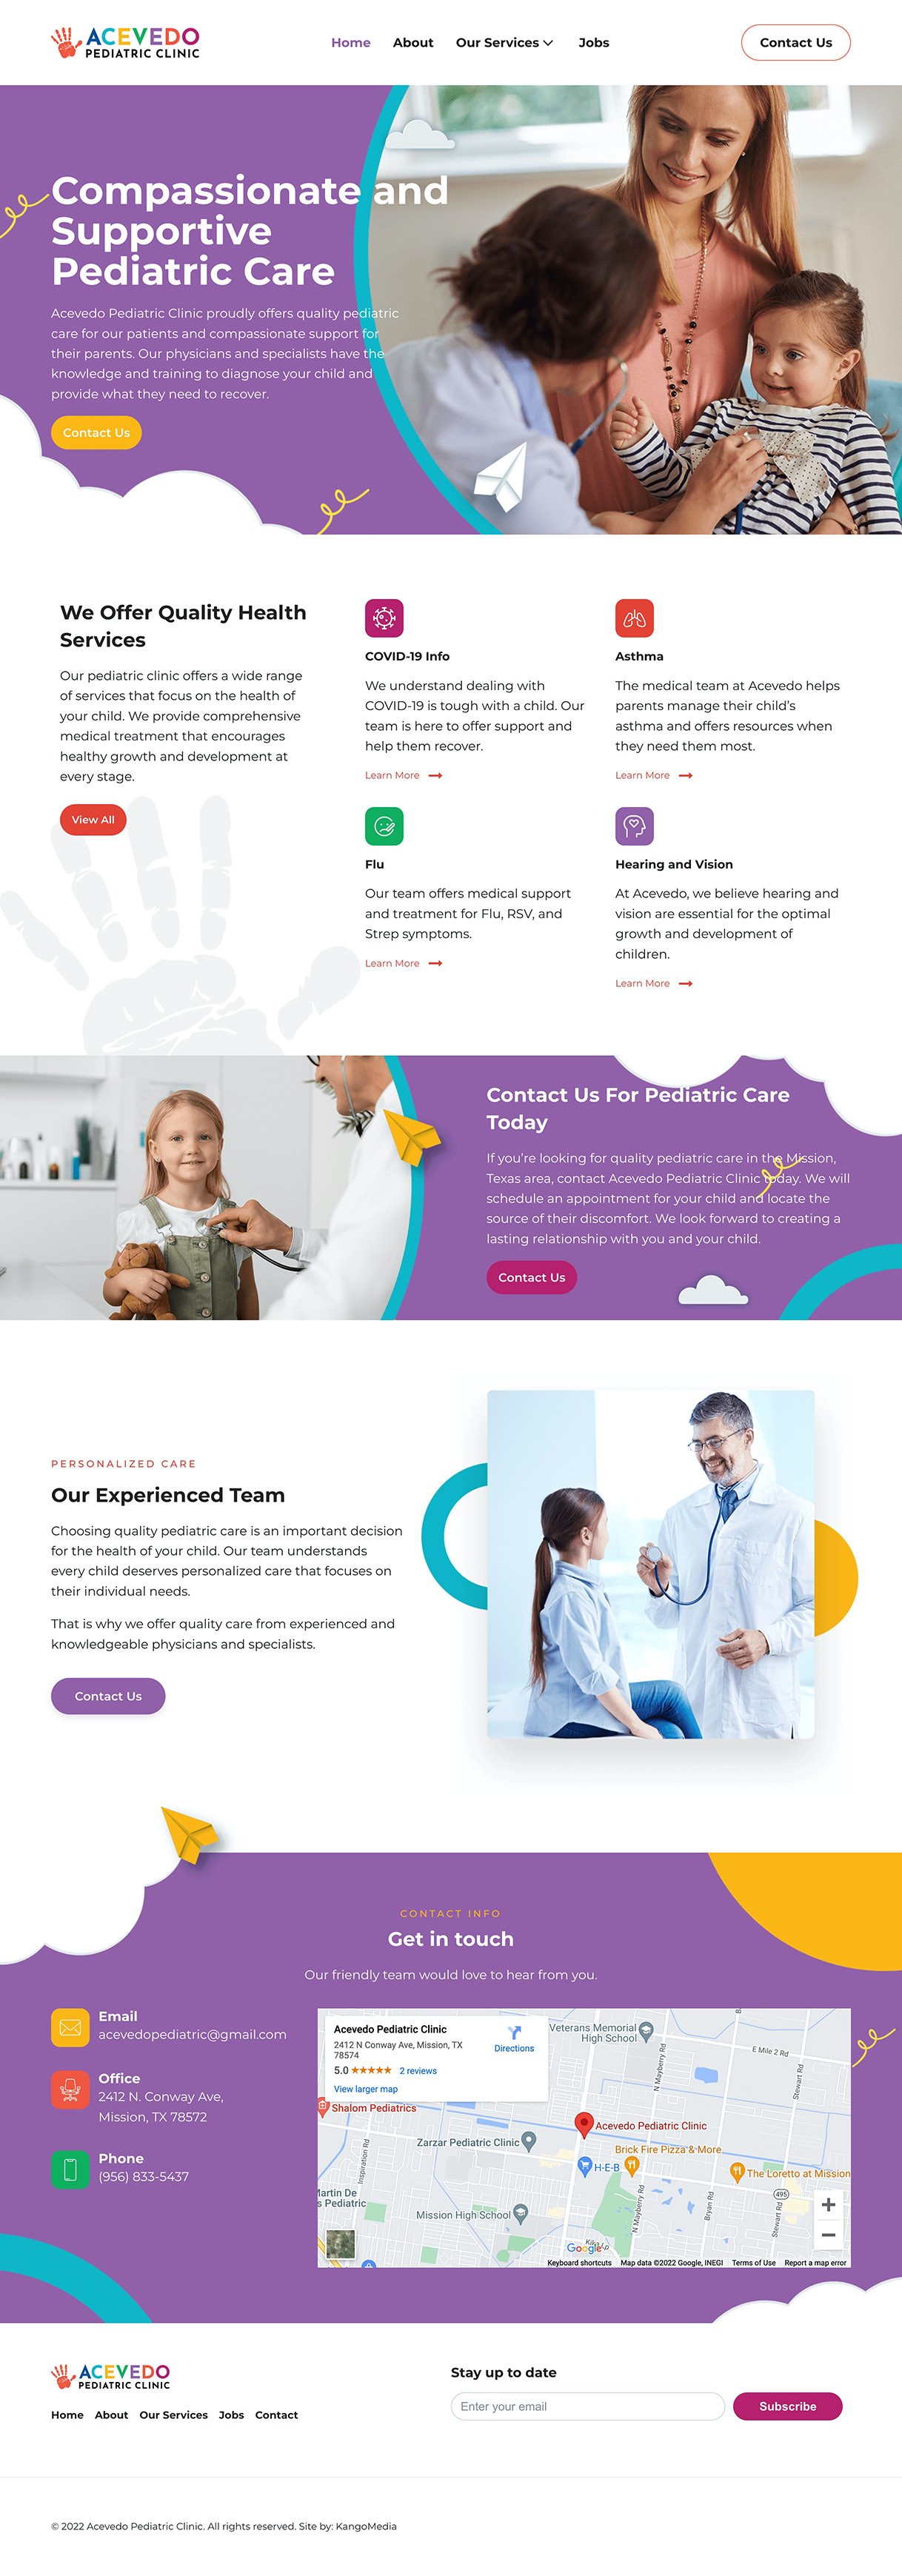 Acevedo Pediatric Clinic Web Design